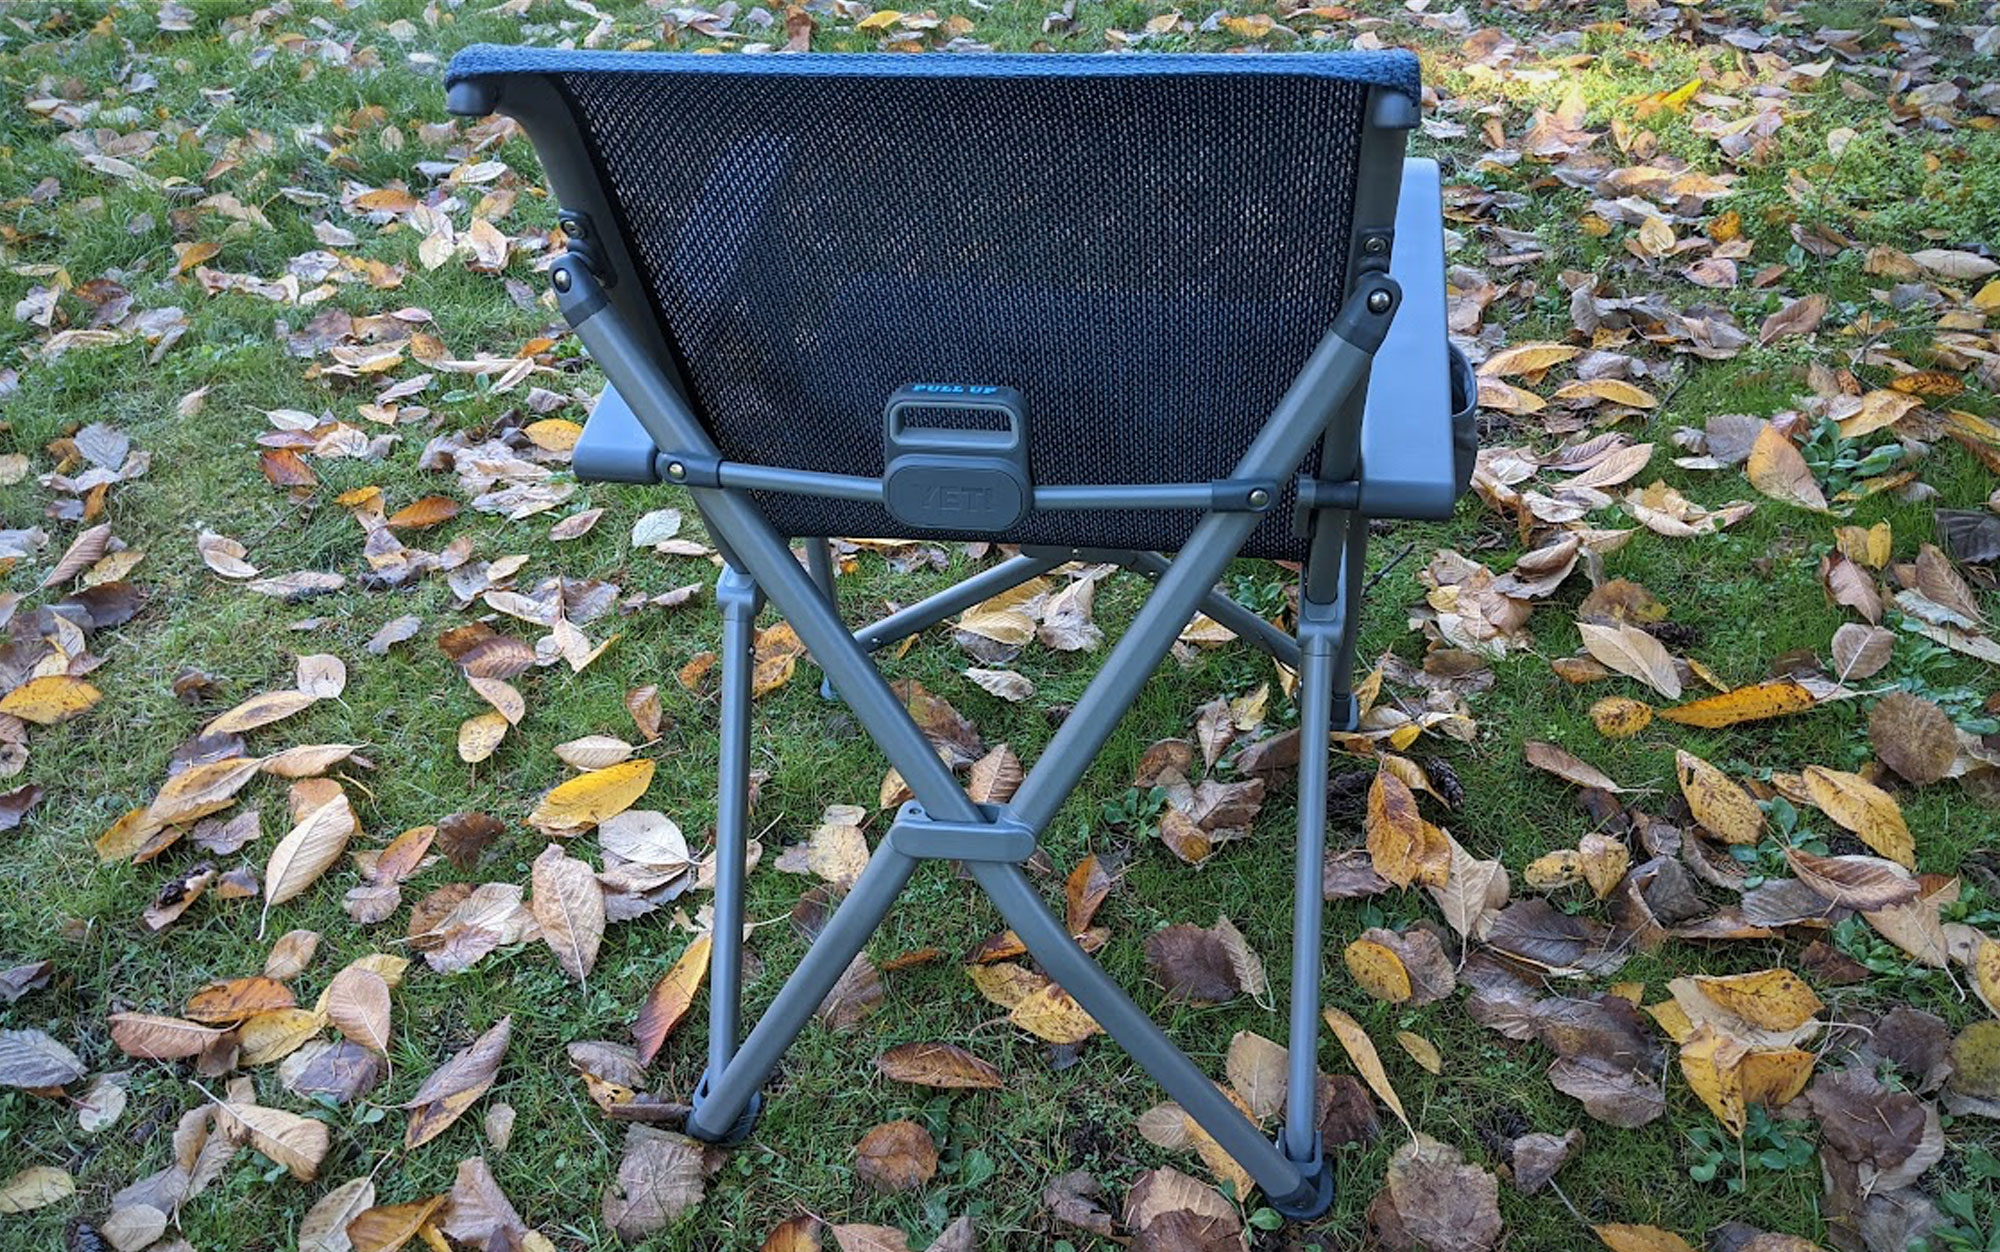 We tested the Yeti Trailhead camp chair.